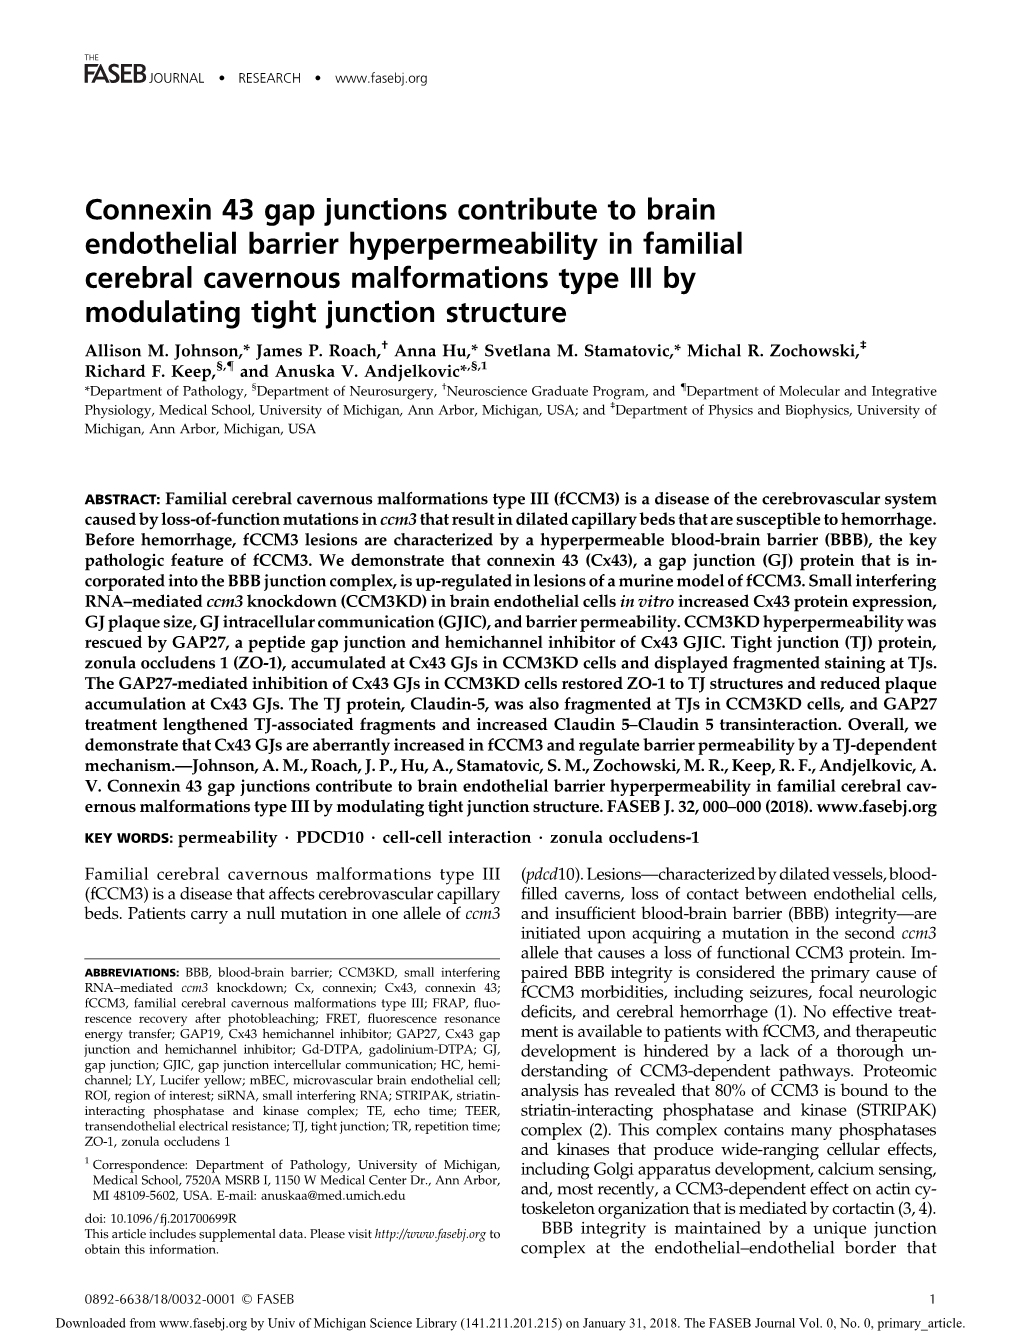 Connexin 43 Gap Junctions Contribute to Brain Endothelial Barrier